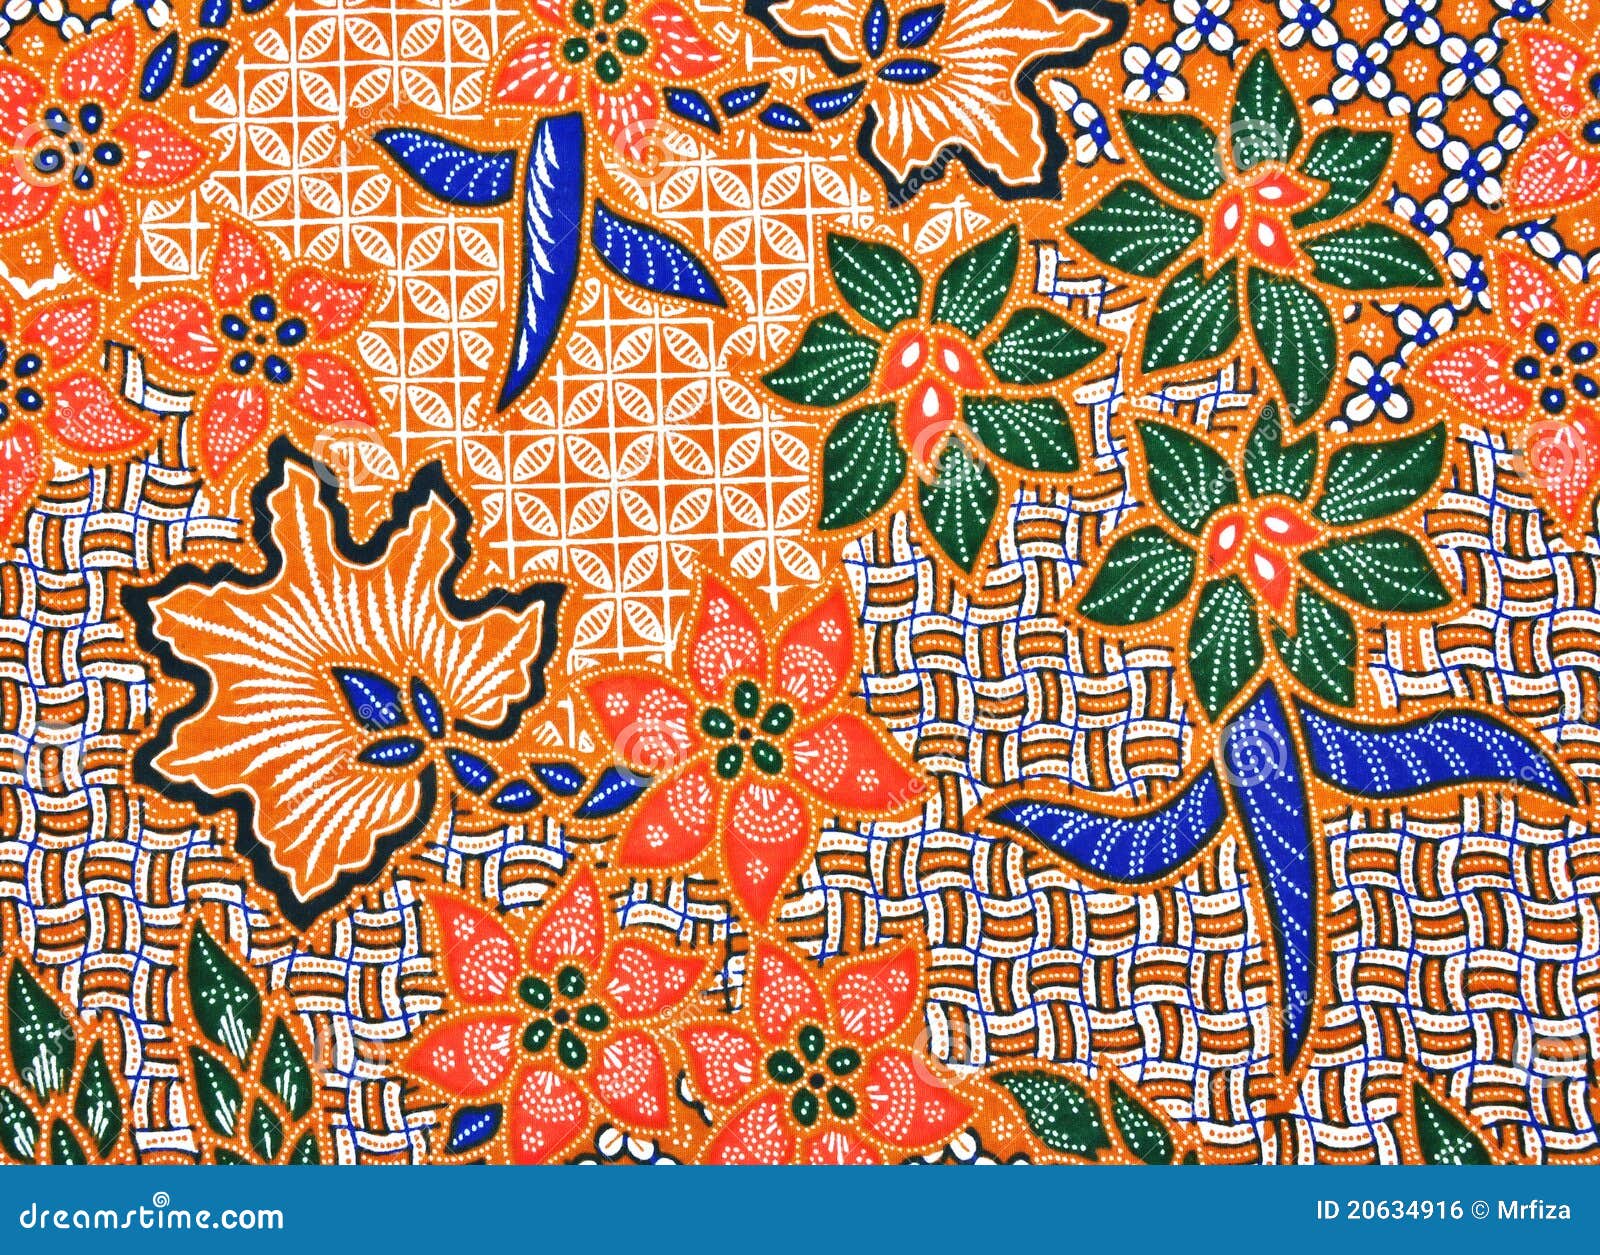  Batik  Texture Royalty Free Stock Image Image 20634916